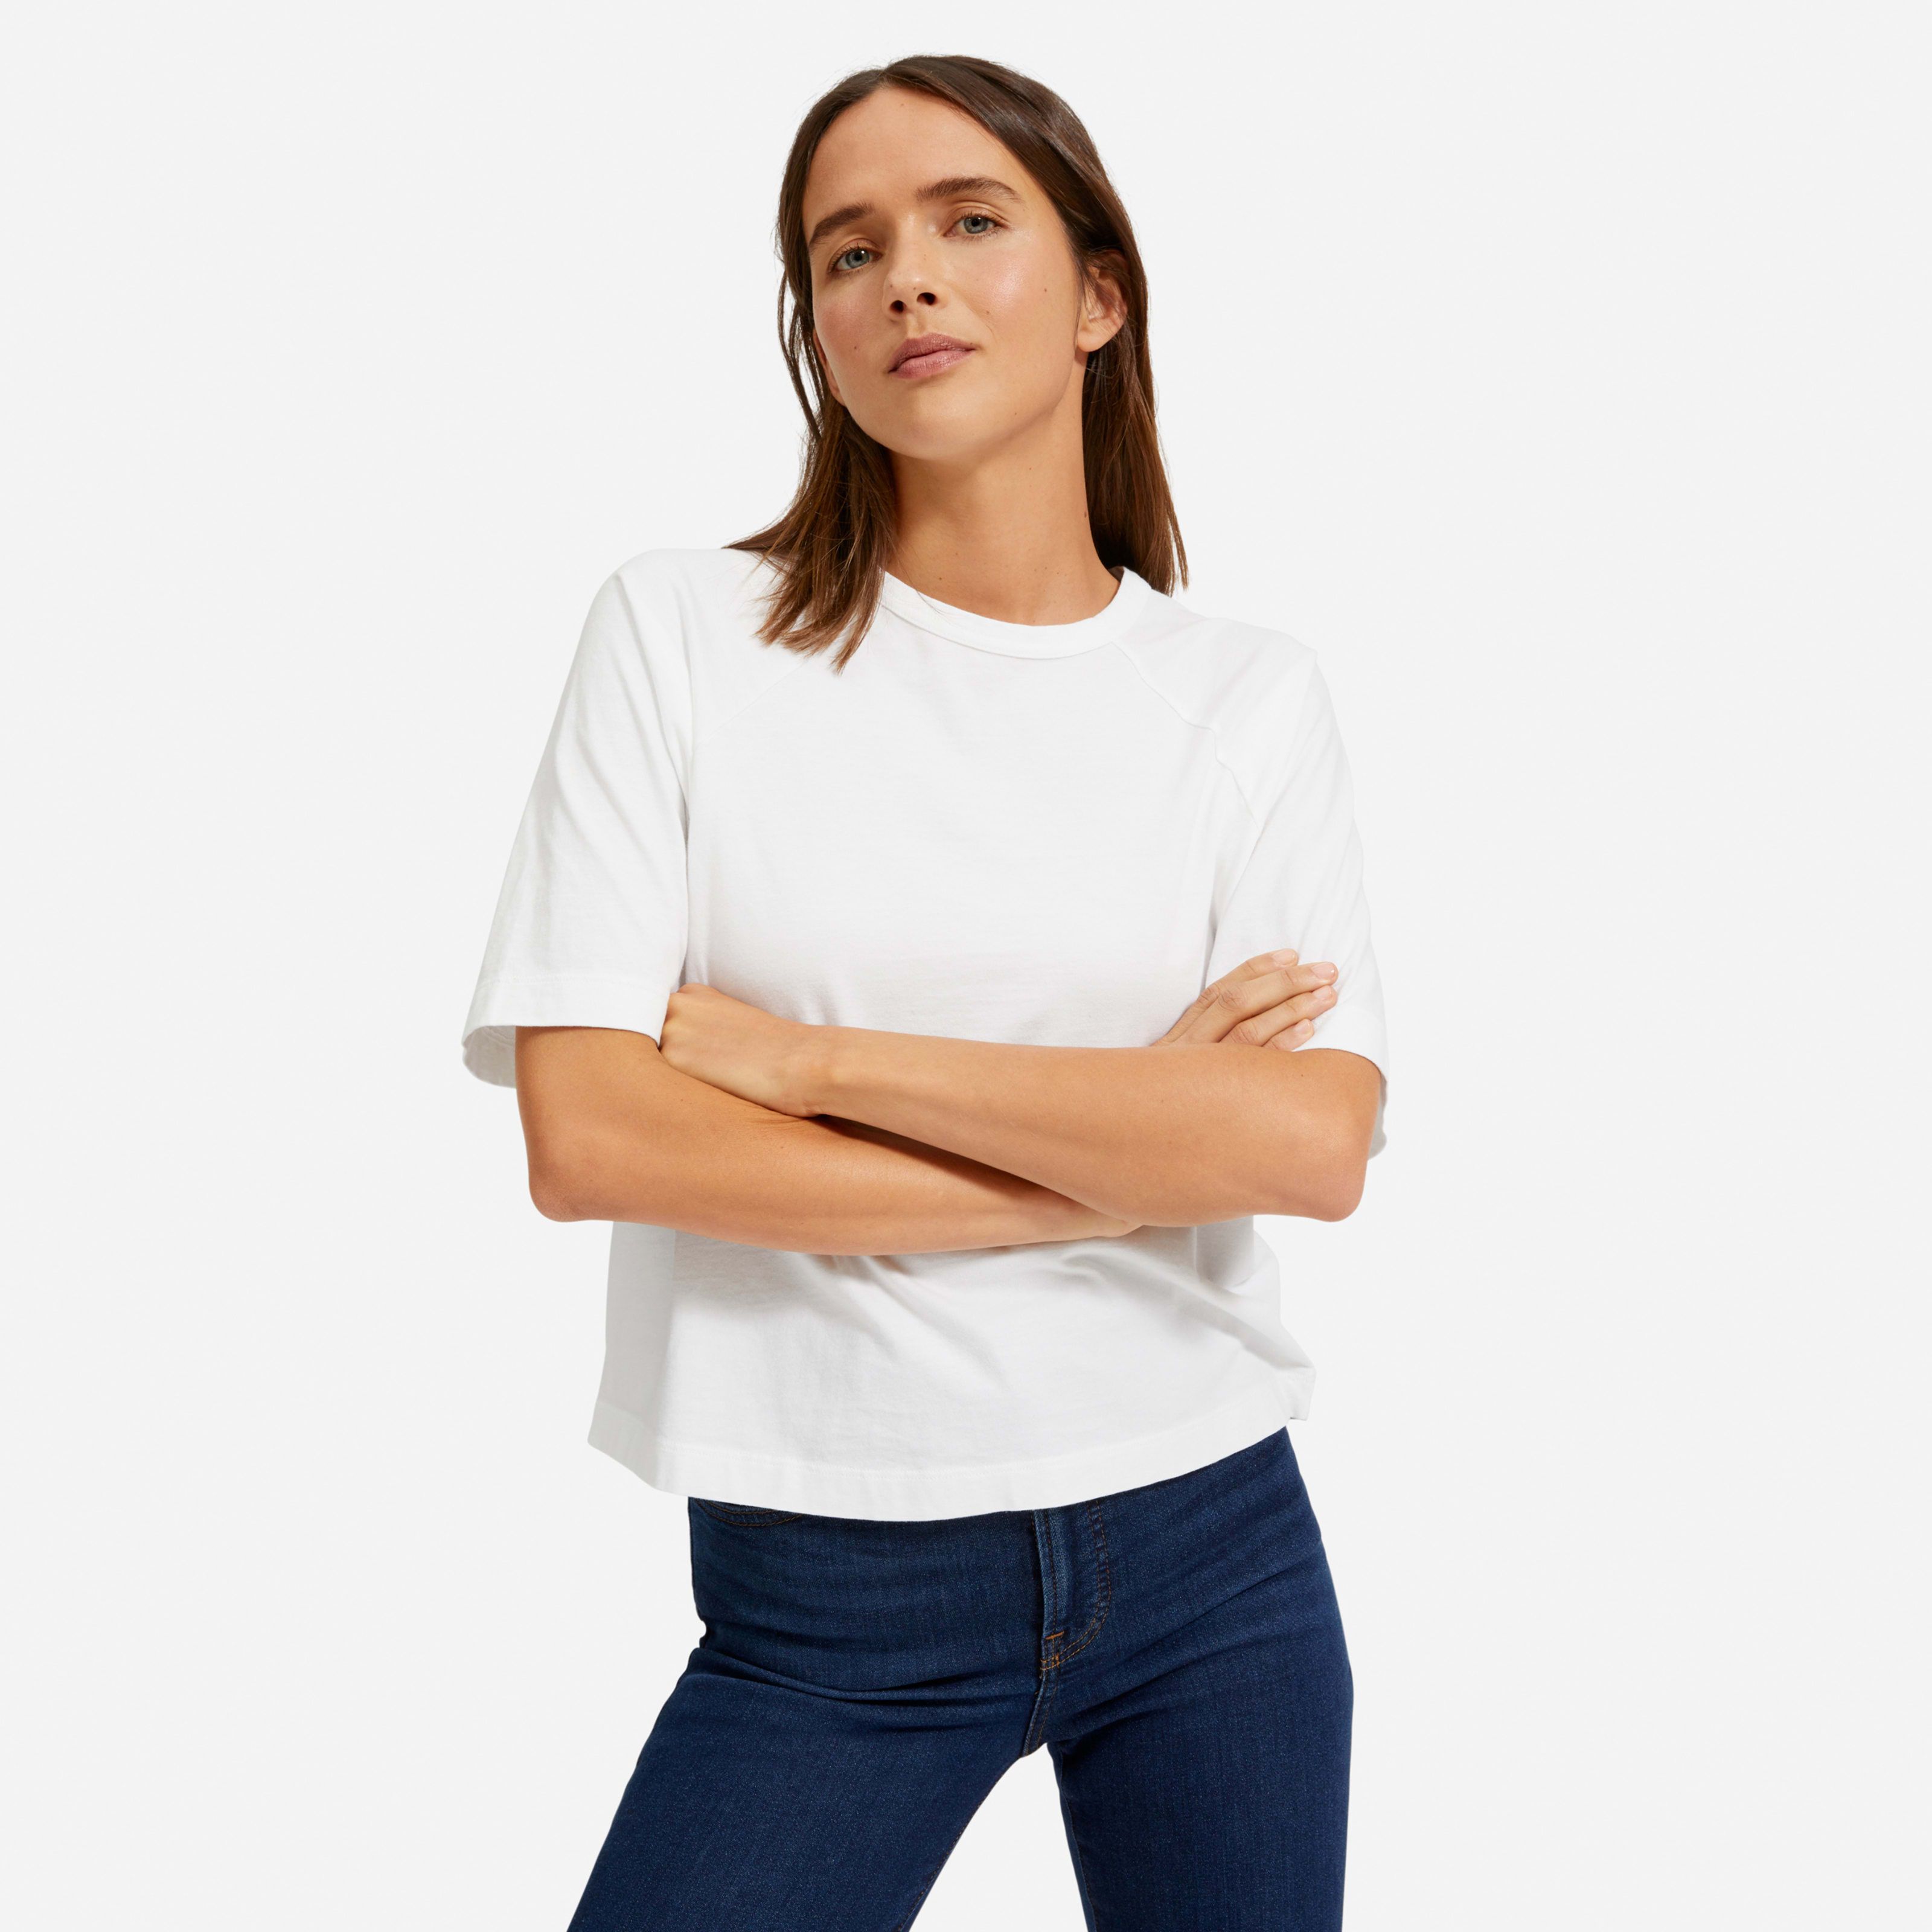 Women's Organic Cotton Boxy Raglan T-Shirt by Everlane in White, Size XL | Everlane